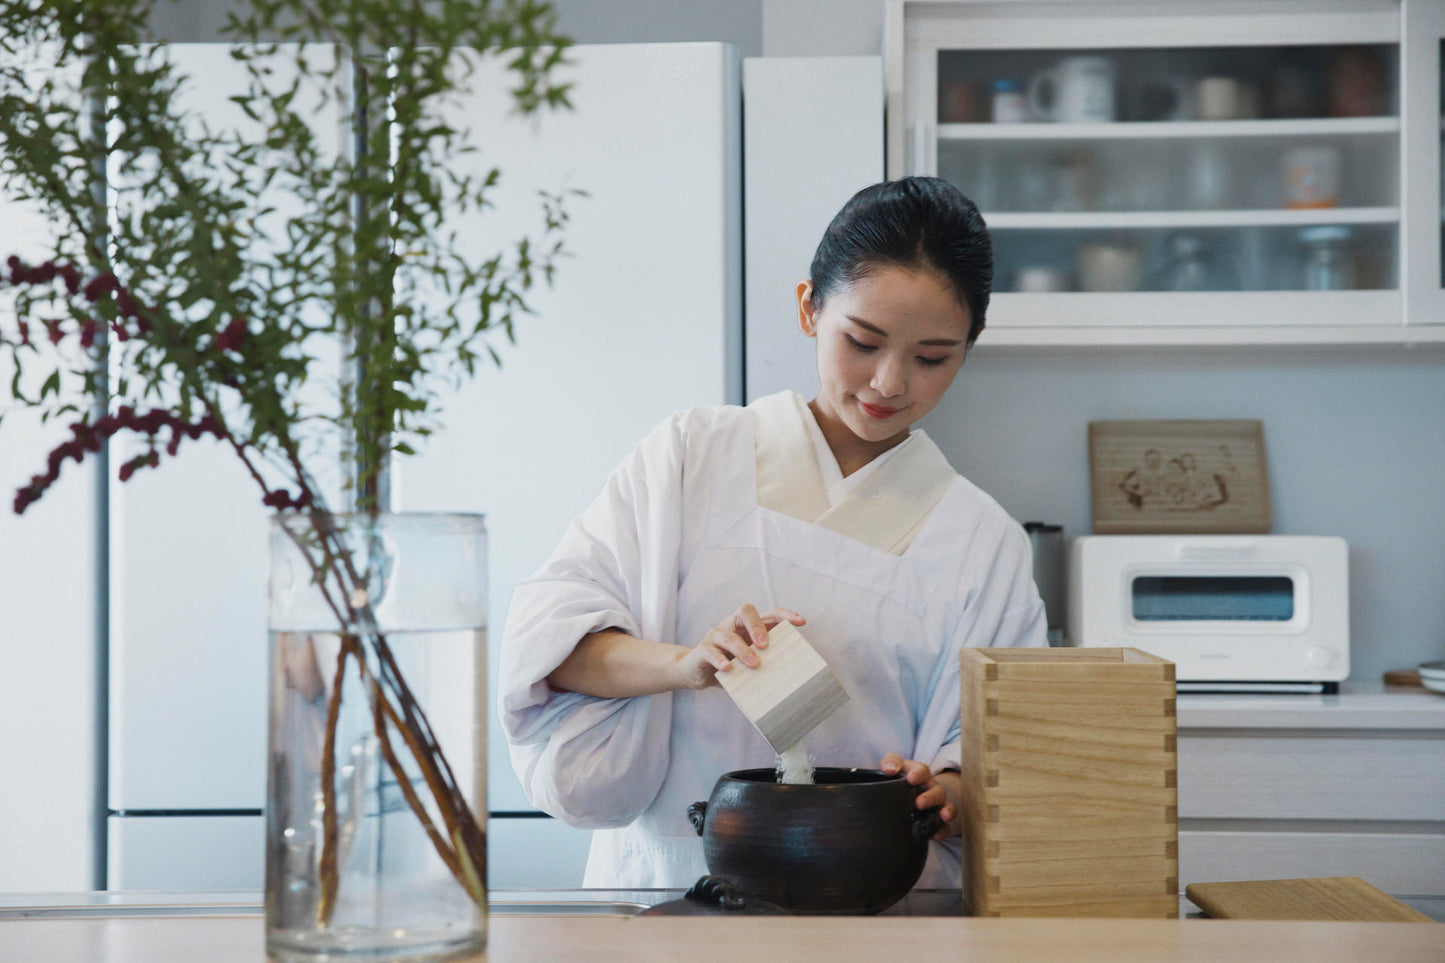 Kimonoko Cooking #1: “Learn to make the Best Ramen yourself!”